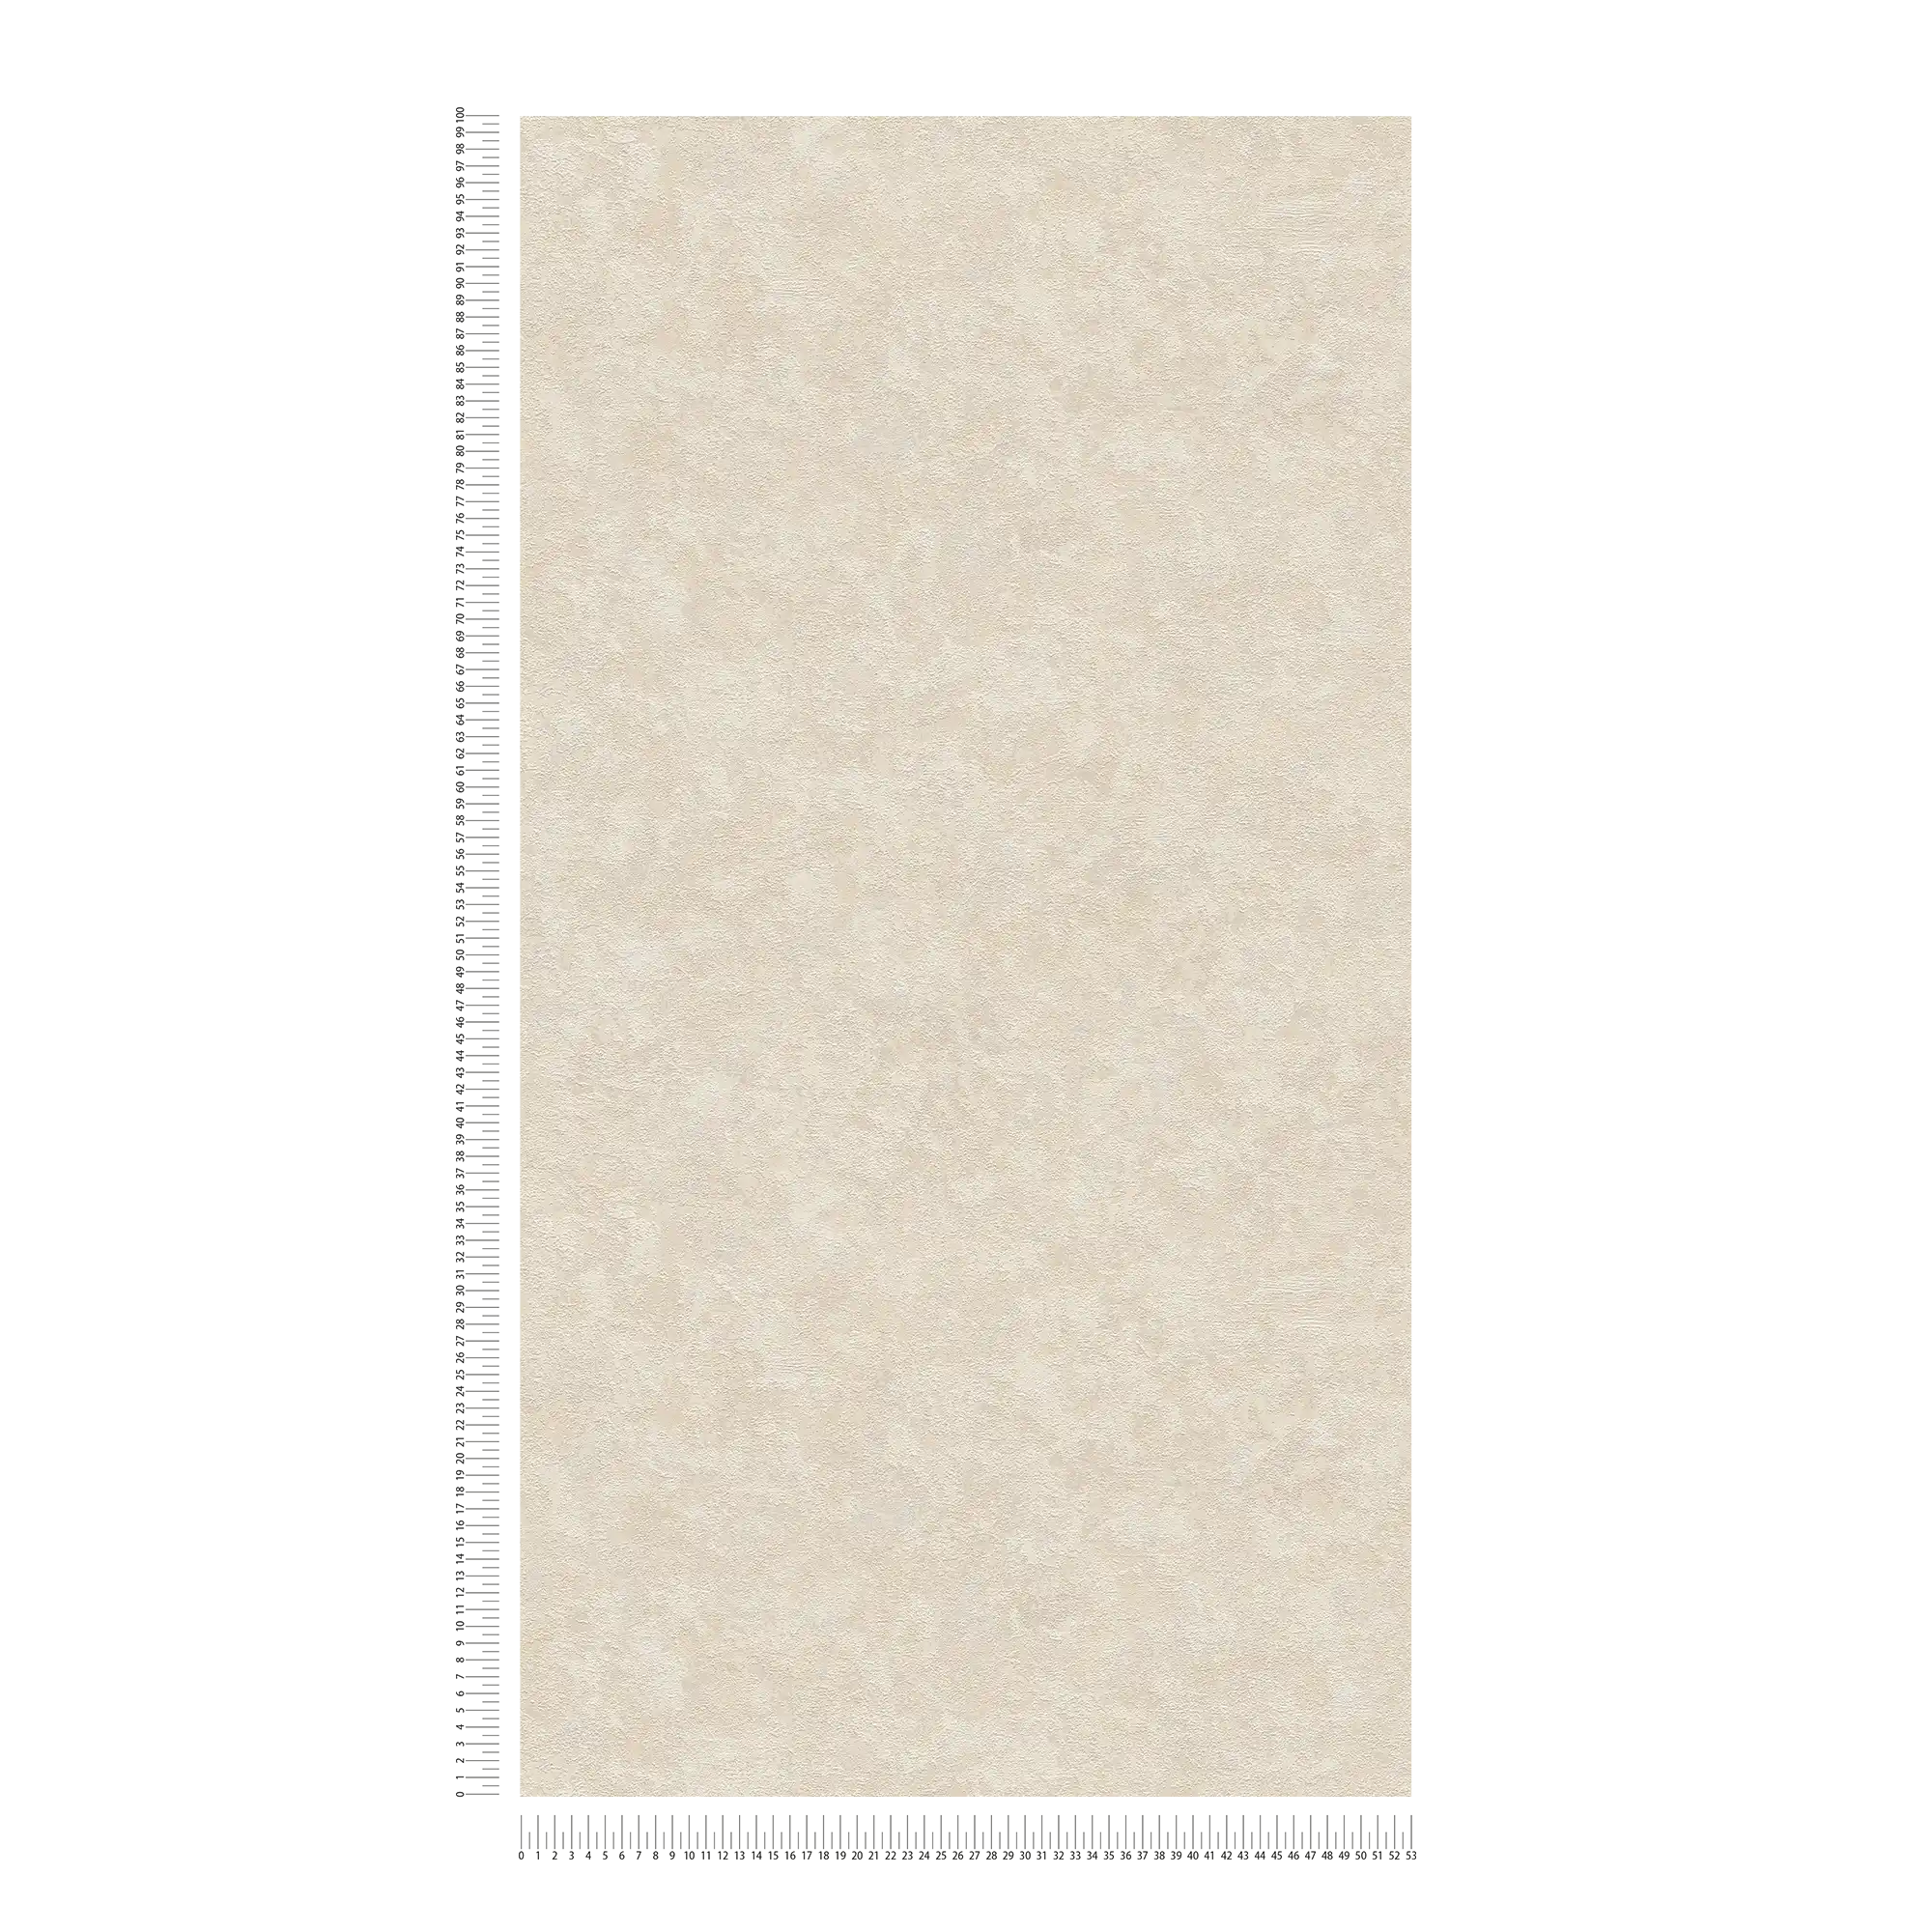             Textured wallpaper plain mottled - beige, brown
        